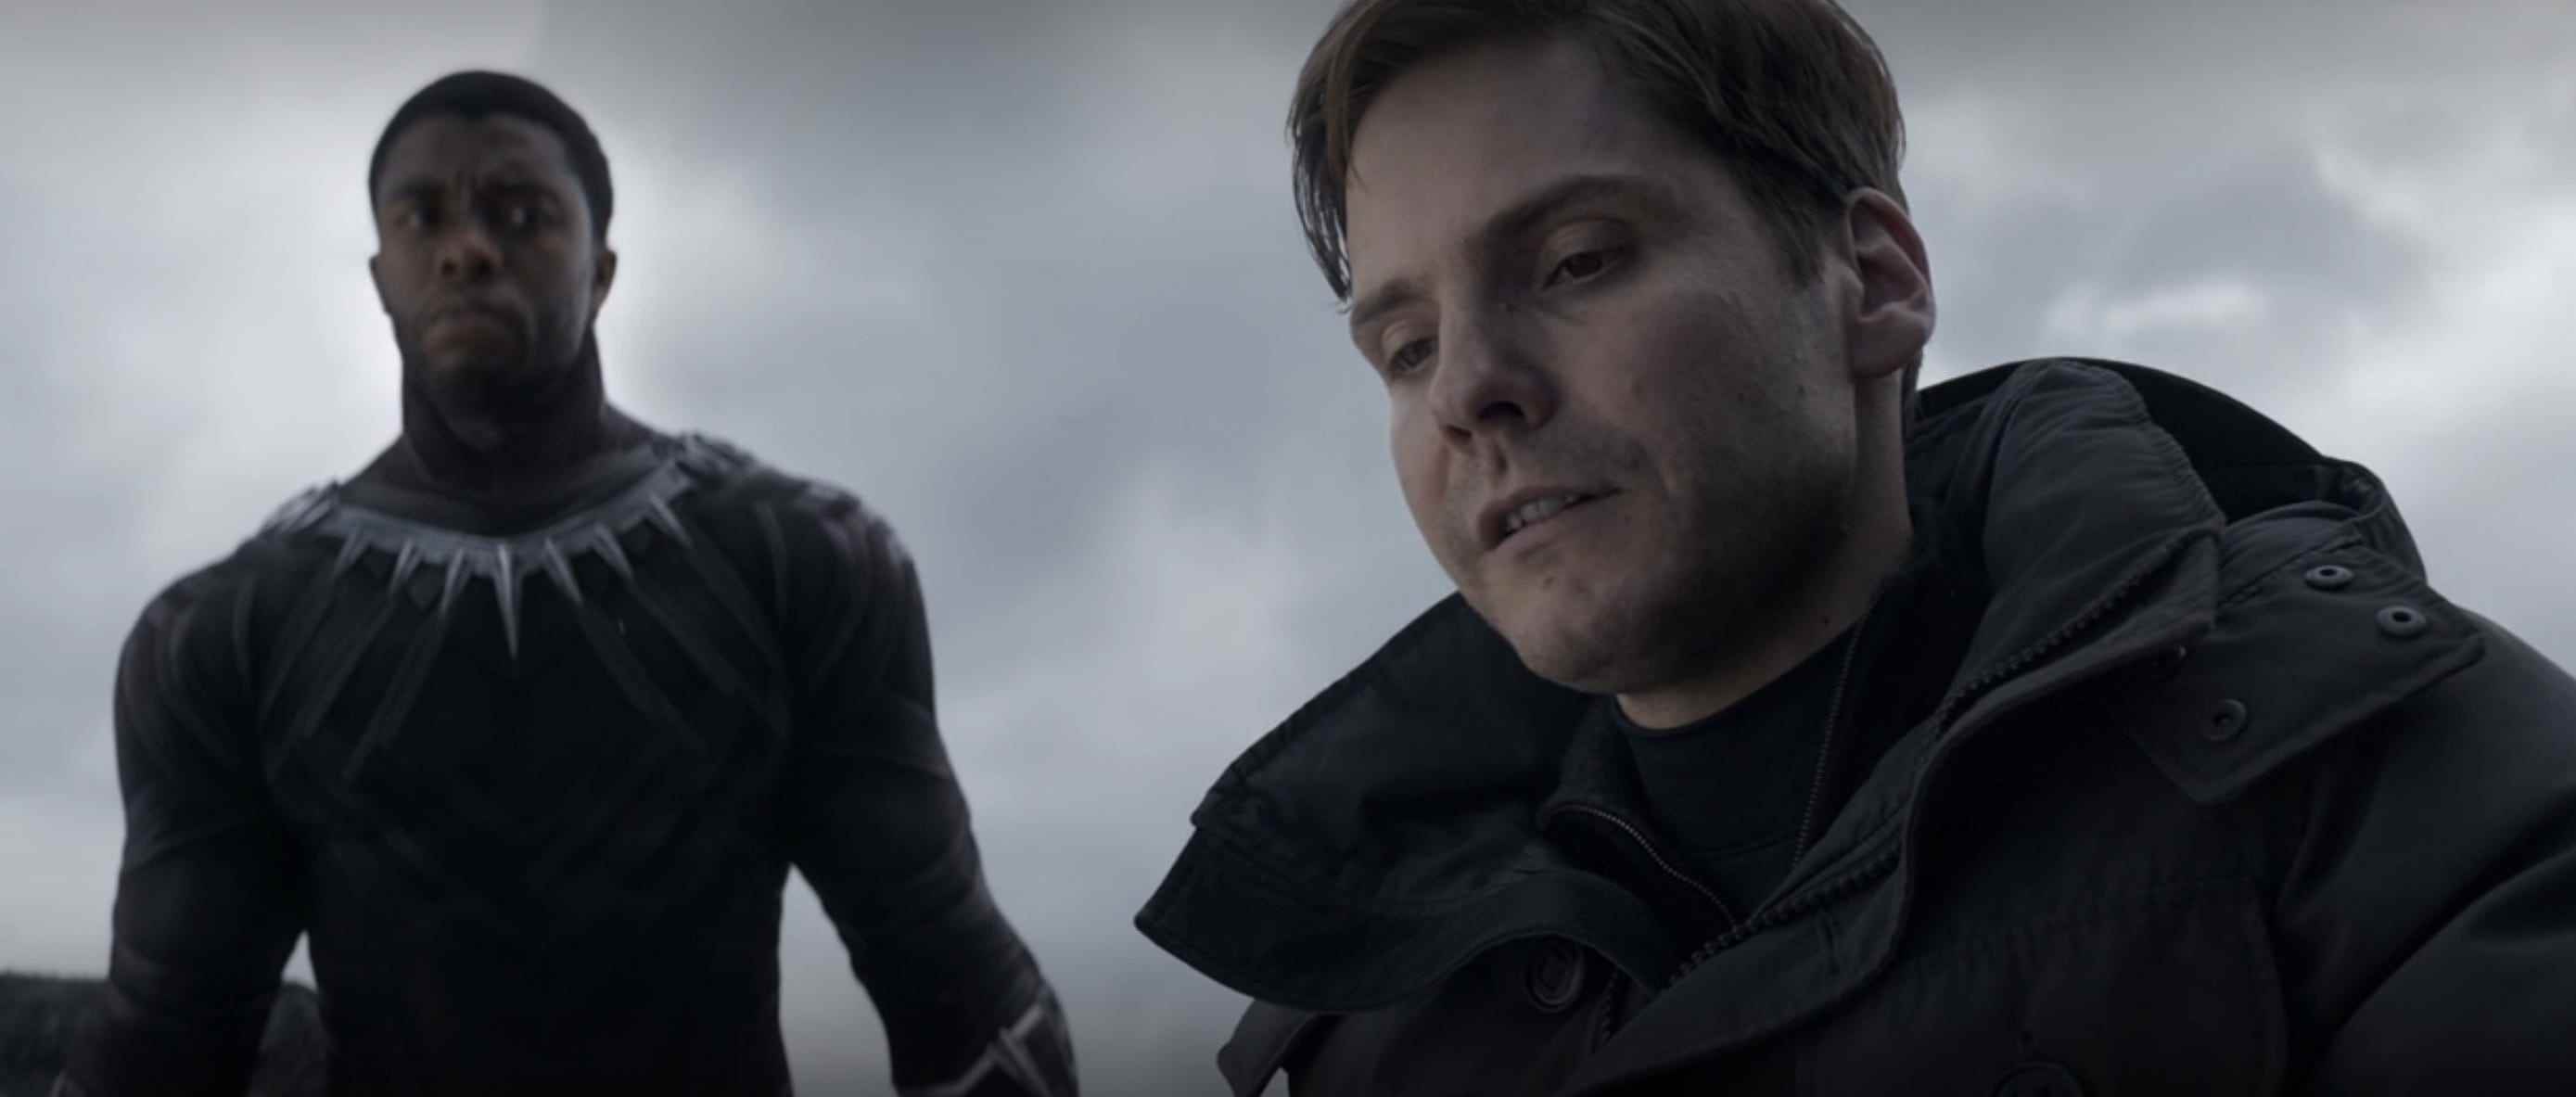 T'Challa konfrontiert Zemo in Captain America: Civil War